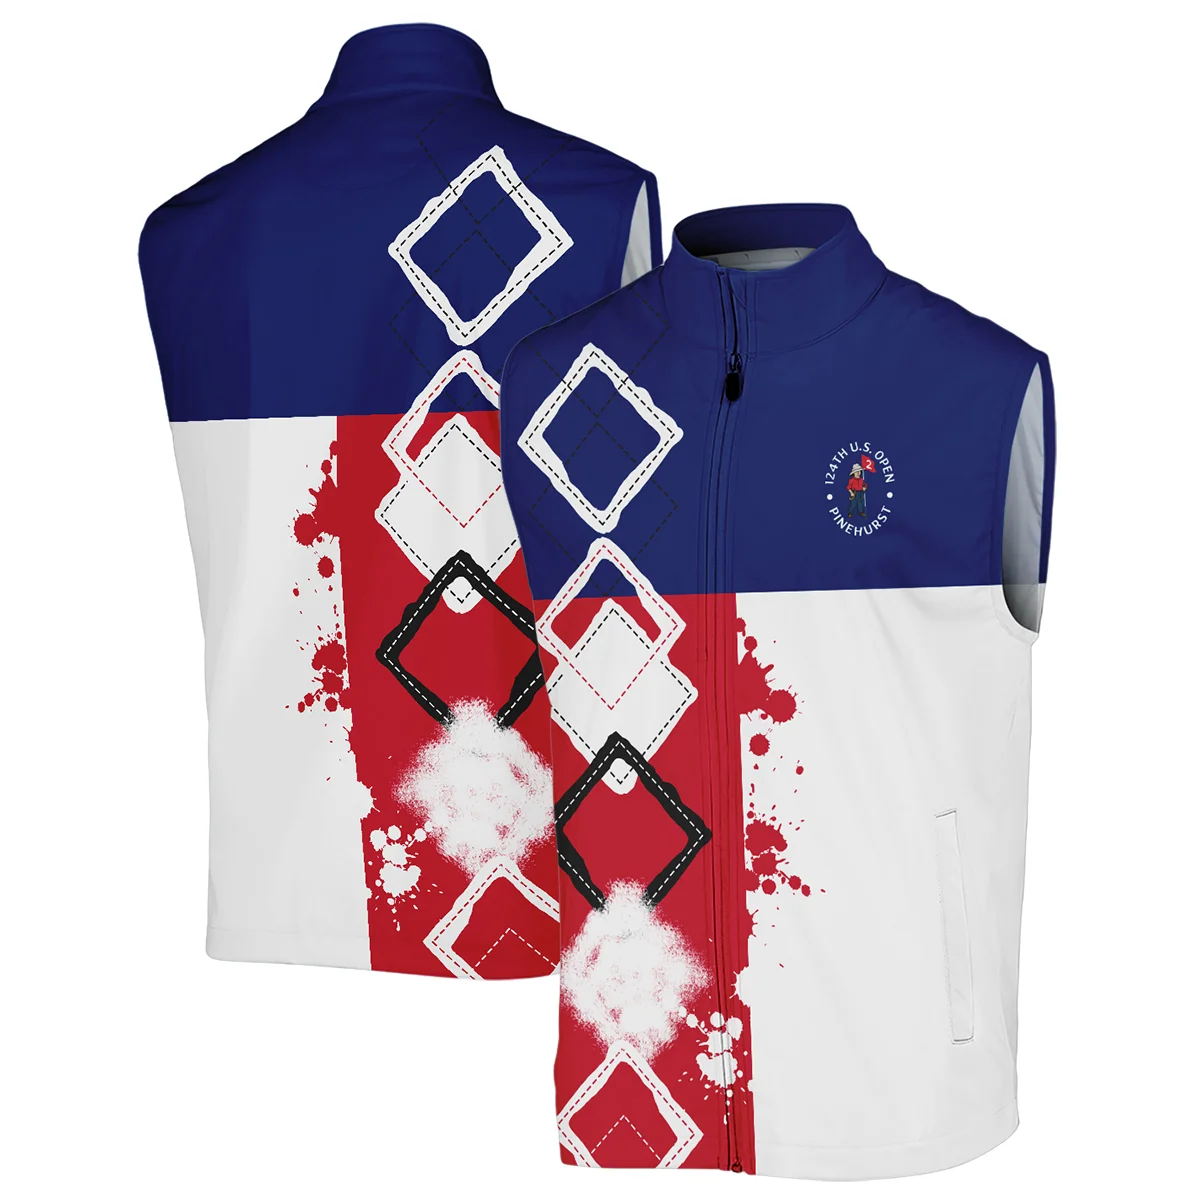 124th U.S. Open Pinehurst Titleist Hoodie Shirt Blue Red White Pattern Grunge All Over Print Hoodie Shirt